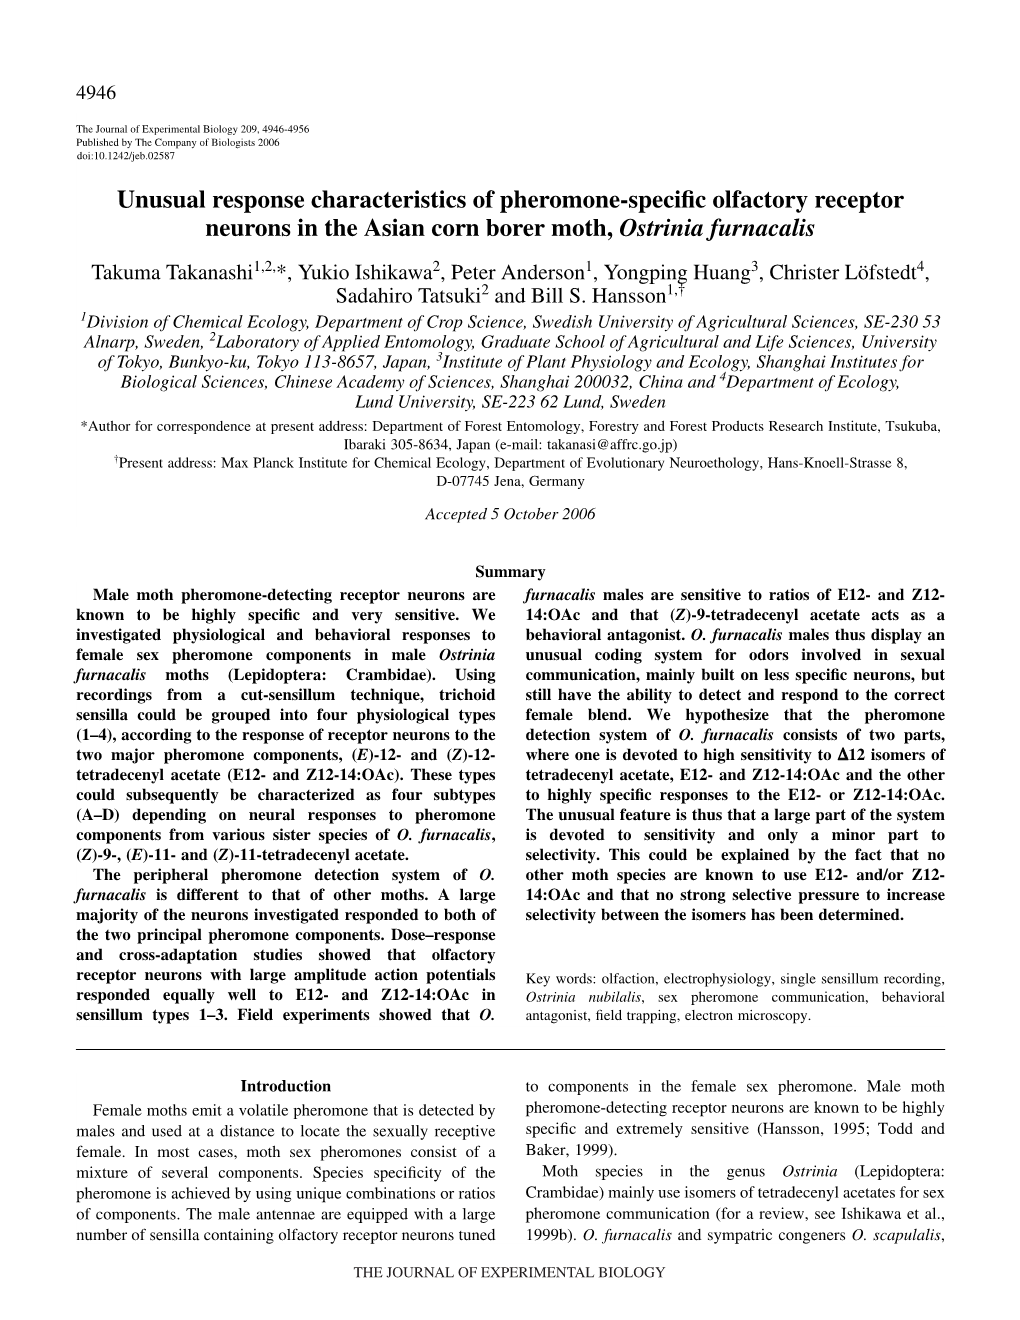 Unusual Response Characteristics of Pheromone-Specific Olfactory Receptor Neurons in the Asian Corn Borer Moth, Ostrinia Furnaca